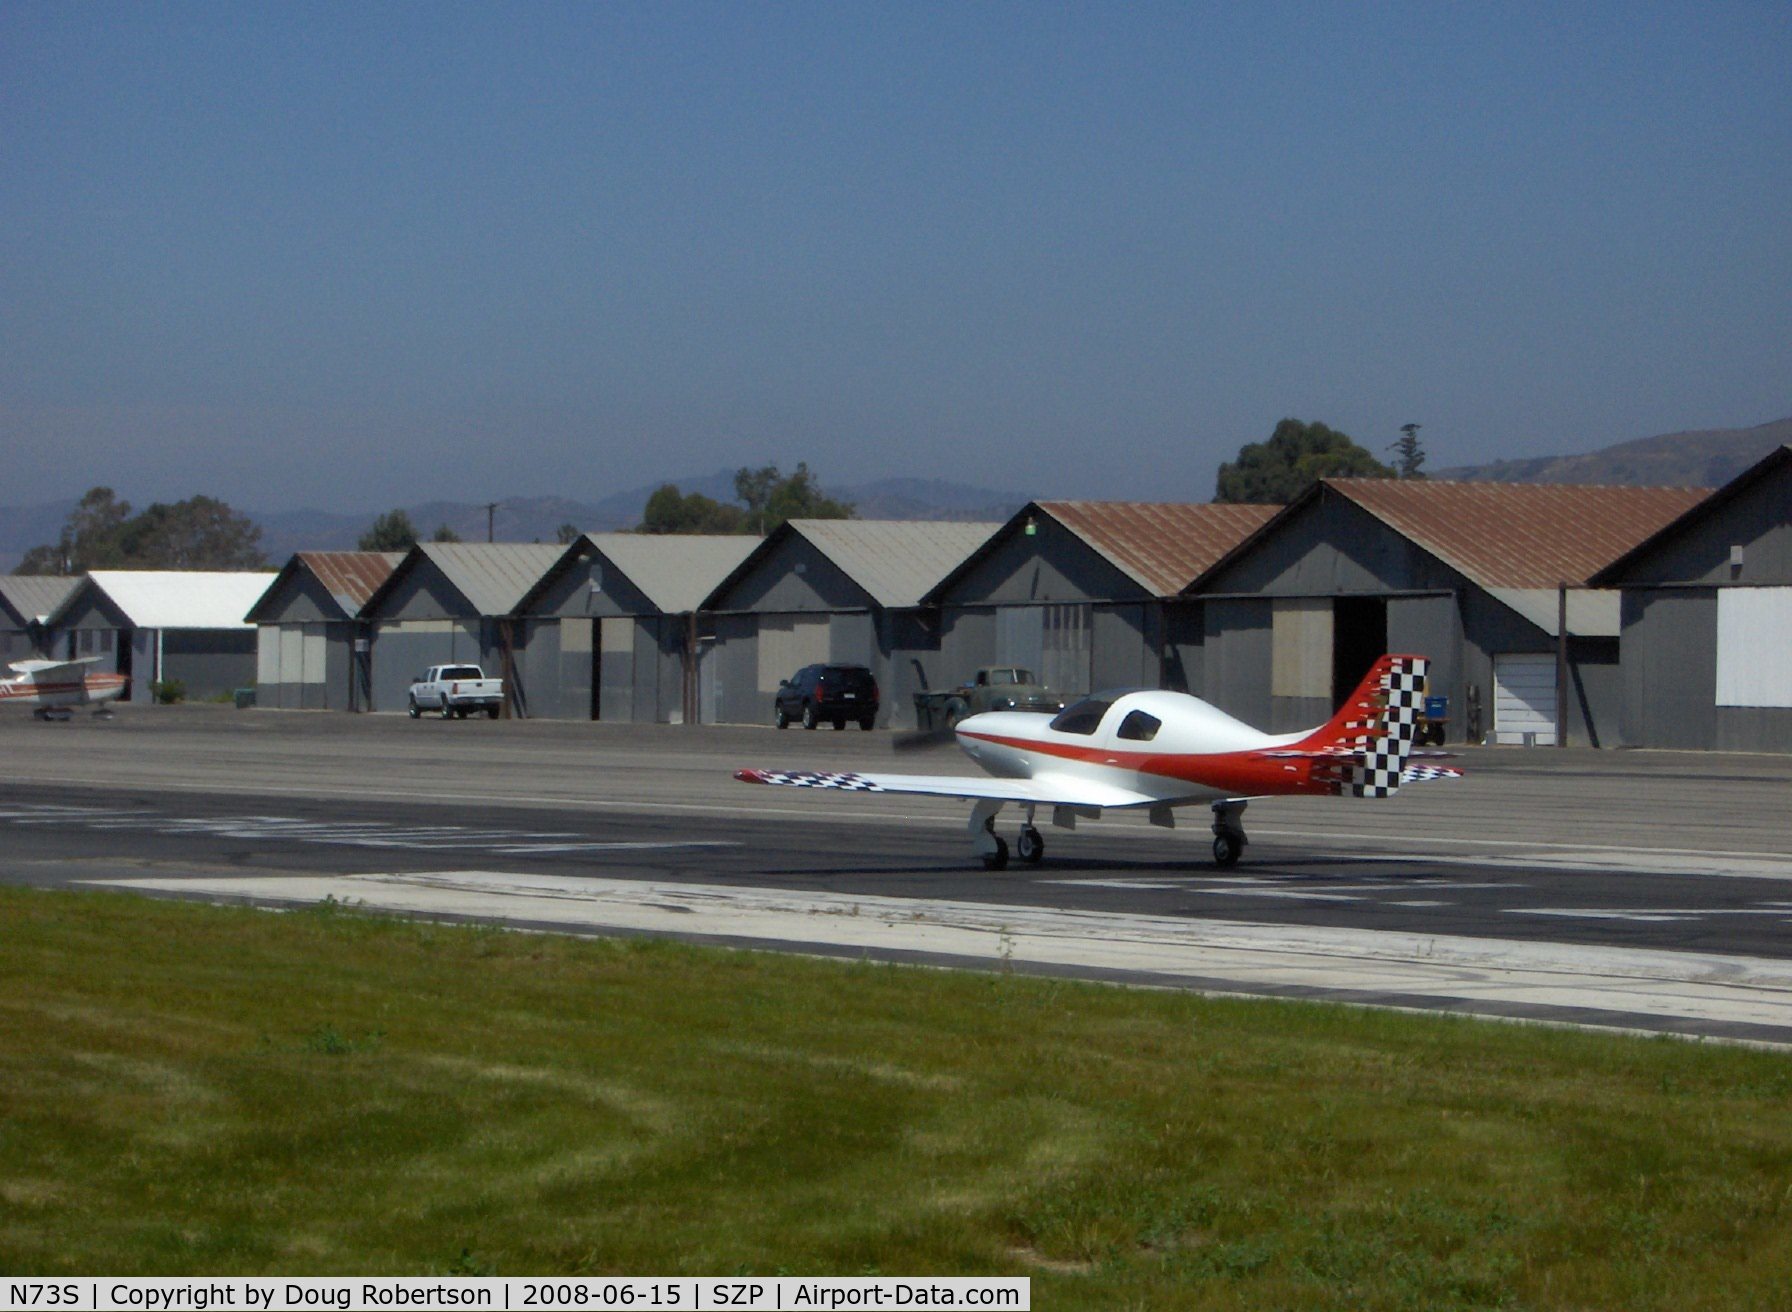 N73S, 2007 Lancair 320 C/N CS001, 2007 Schulze LANCAIR LEGACY 320, Lycoming AEIO-320-D1B 160 Hp, landing roll Rwy 22